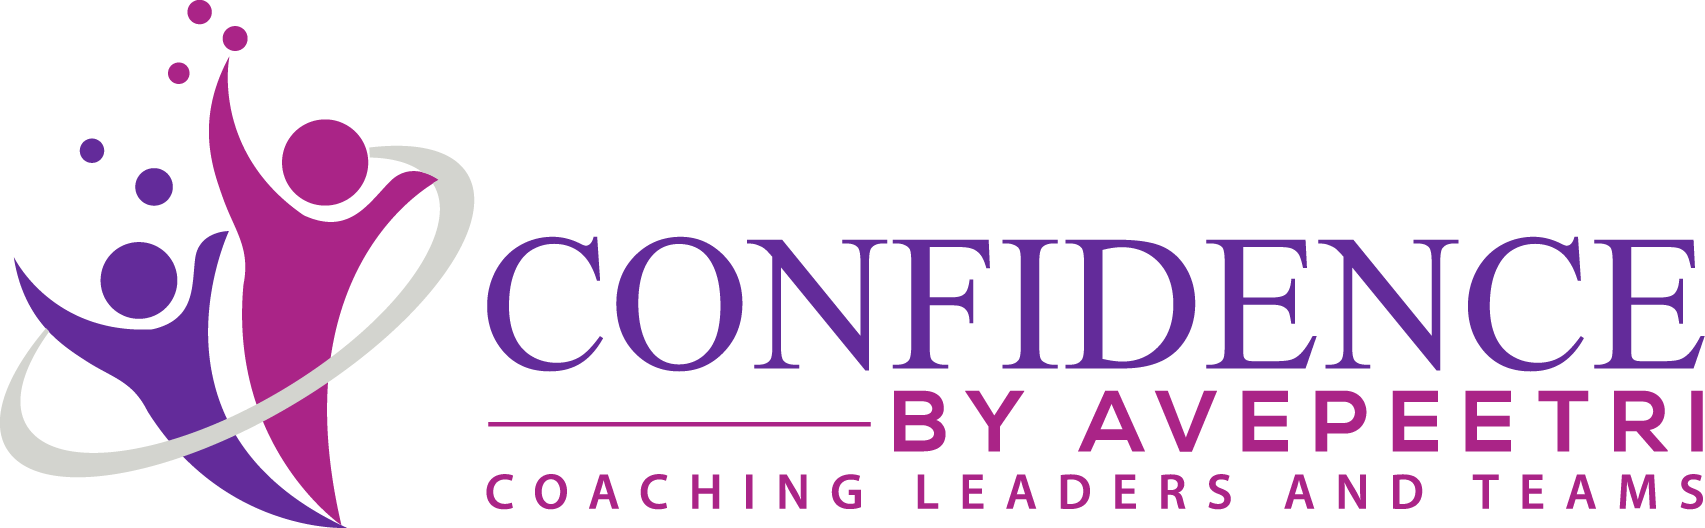 Confident Leadership Coach